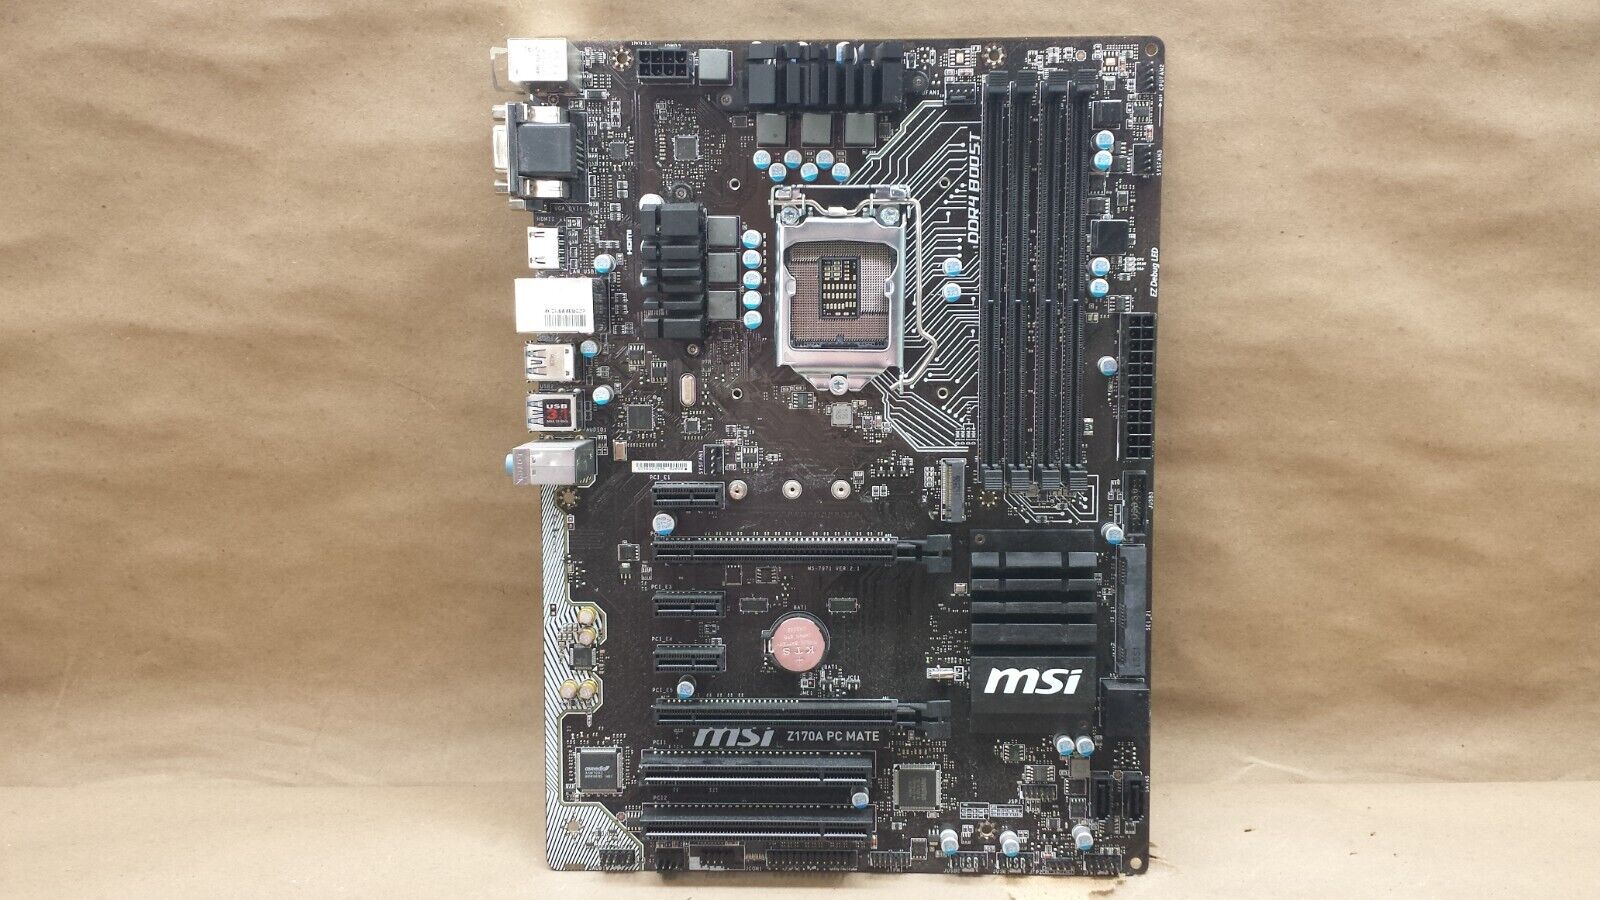 MSI Z170A PC MATE LGA1151 MOTHERBOARD + LATEST BIOS (MB93)